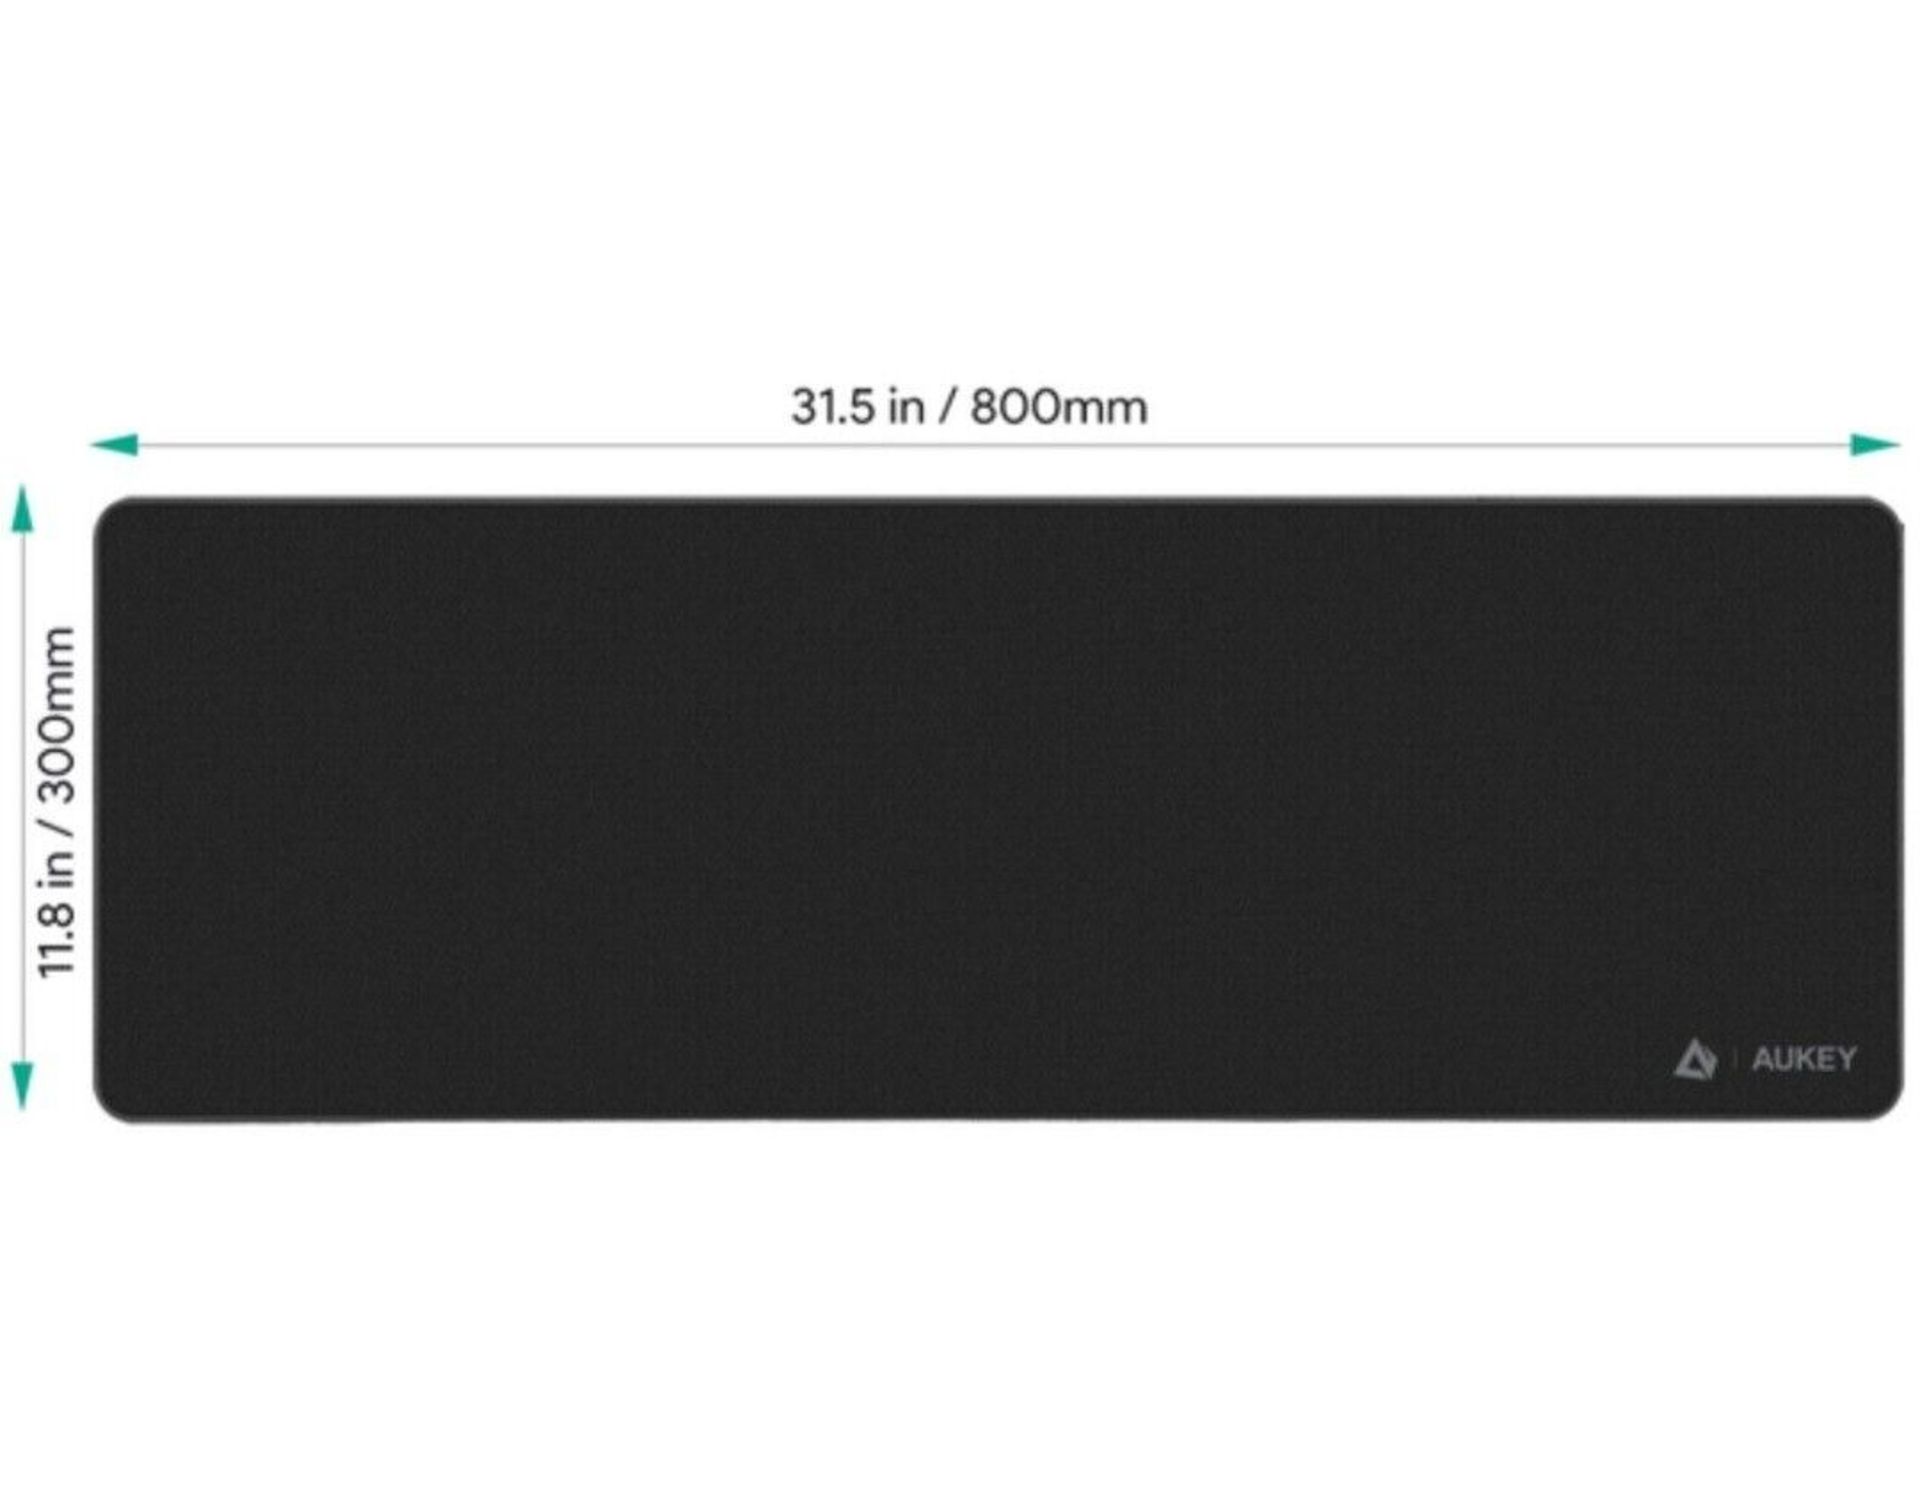 840 X AUKEY KM-P2 MOUSE PAD BLACK 800 X 300 X 4 - LARGE - Image 2 of 7